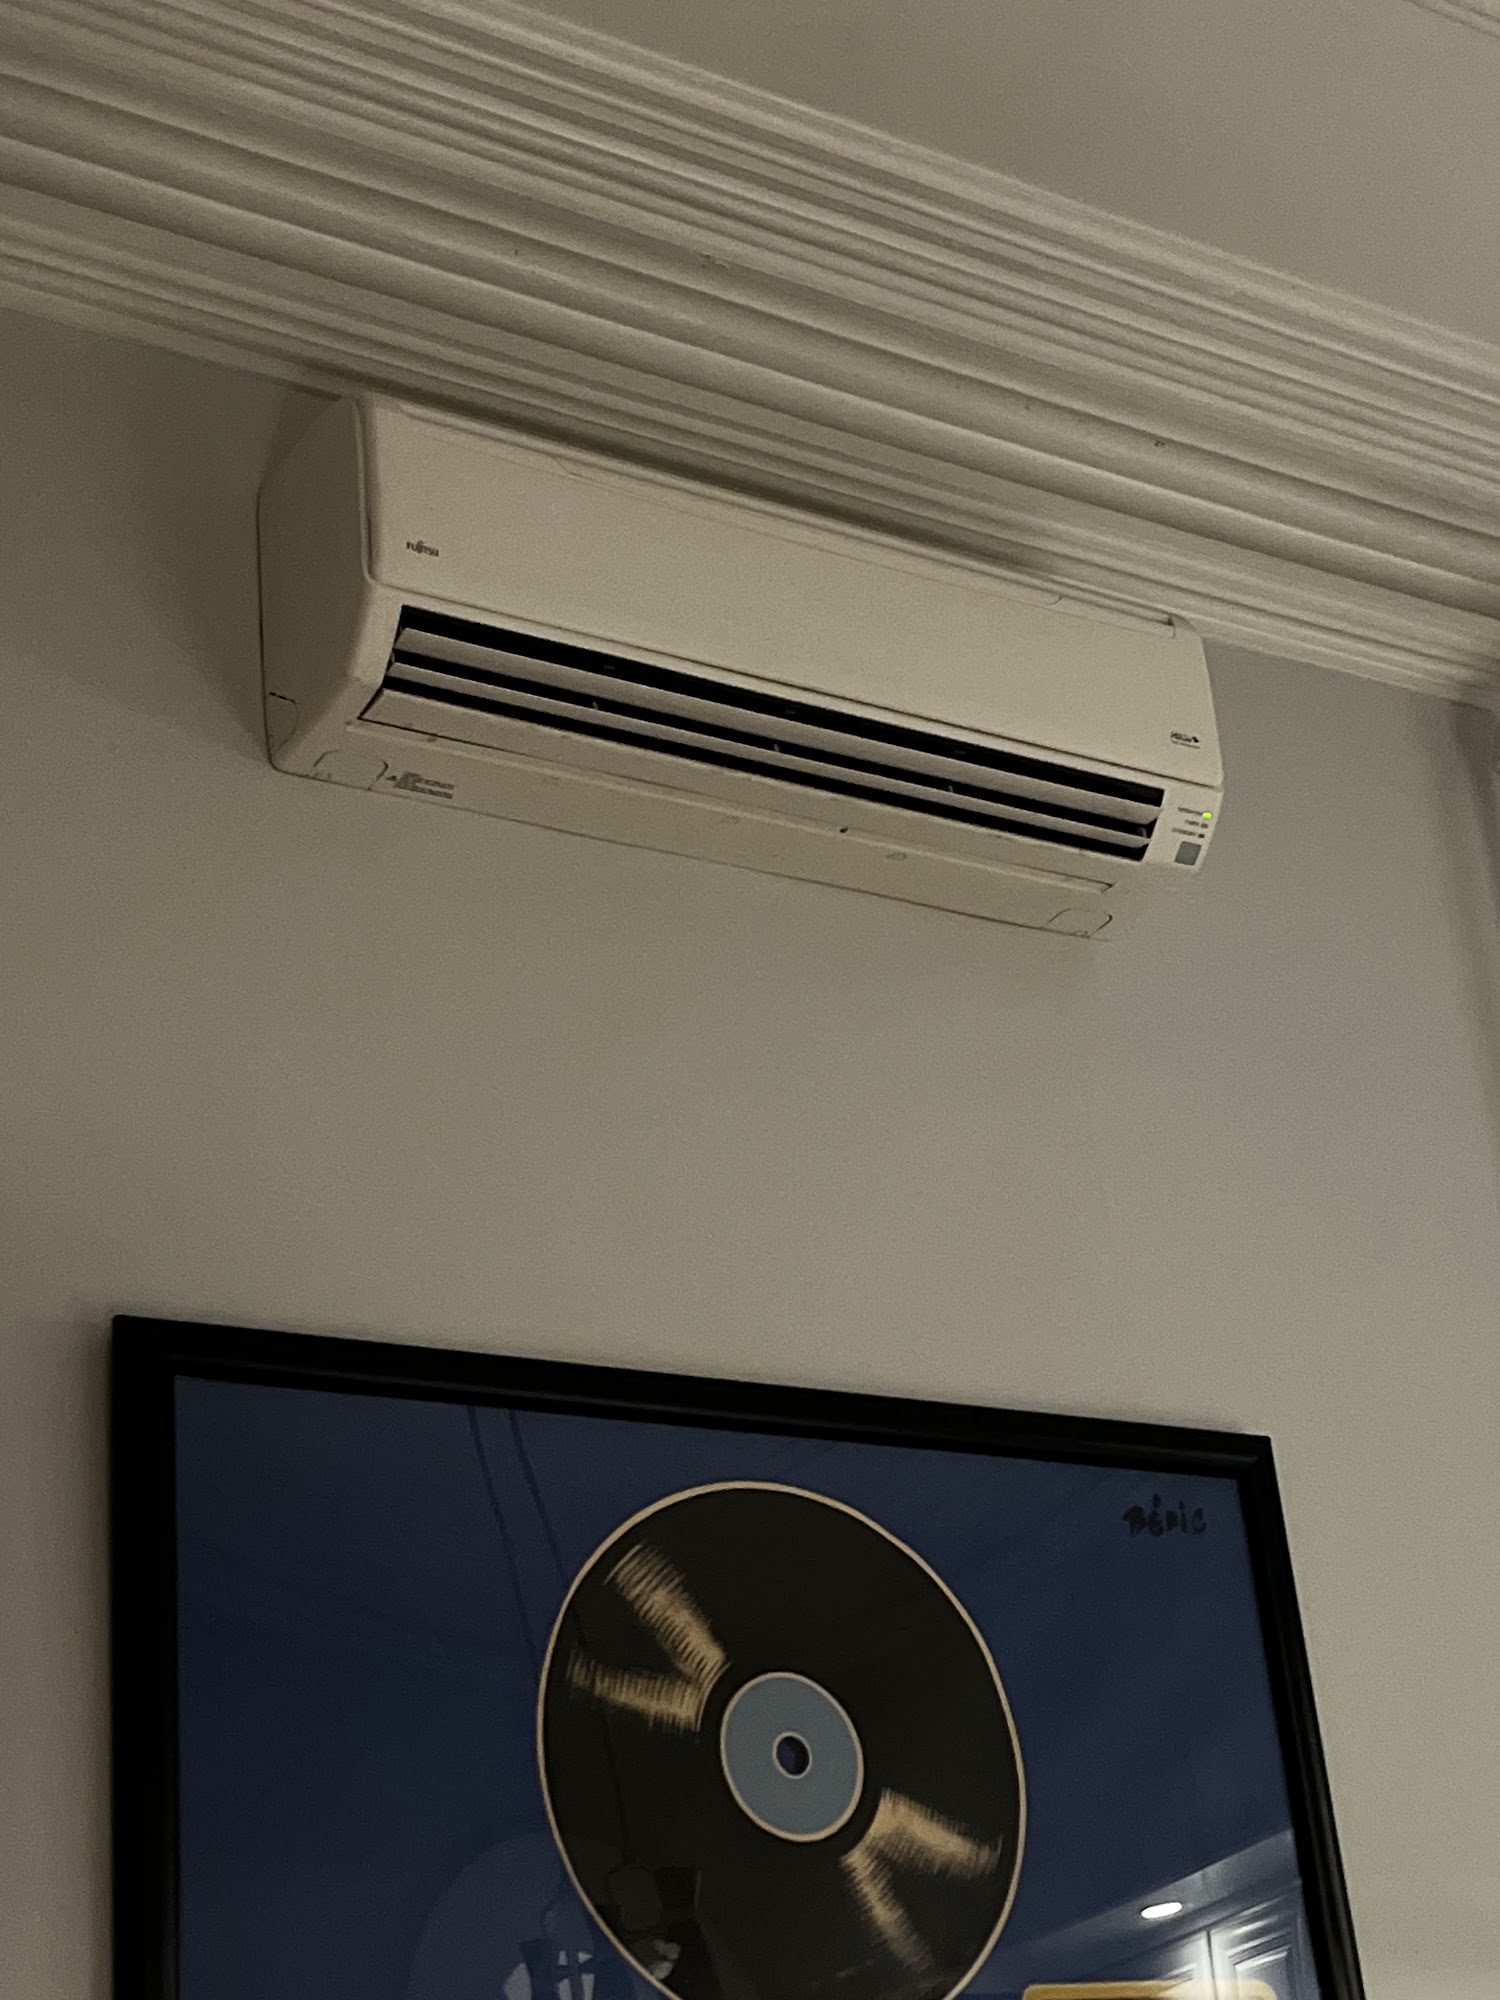 Prestige Air Heating & Cooling, LLC